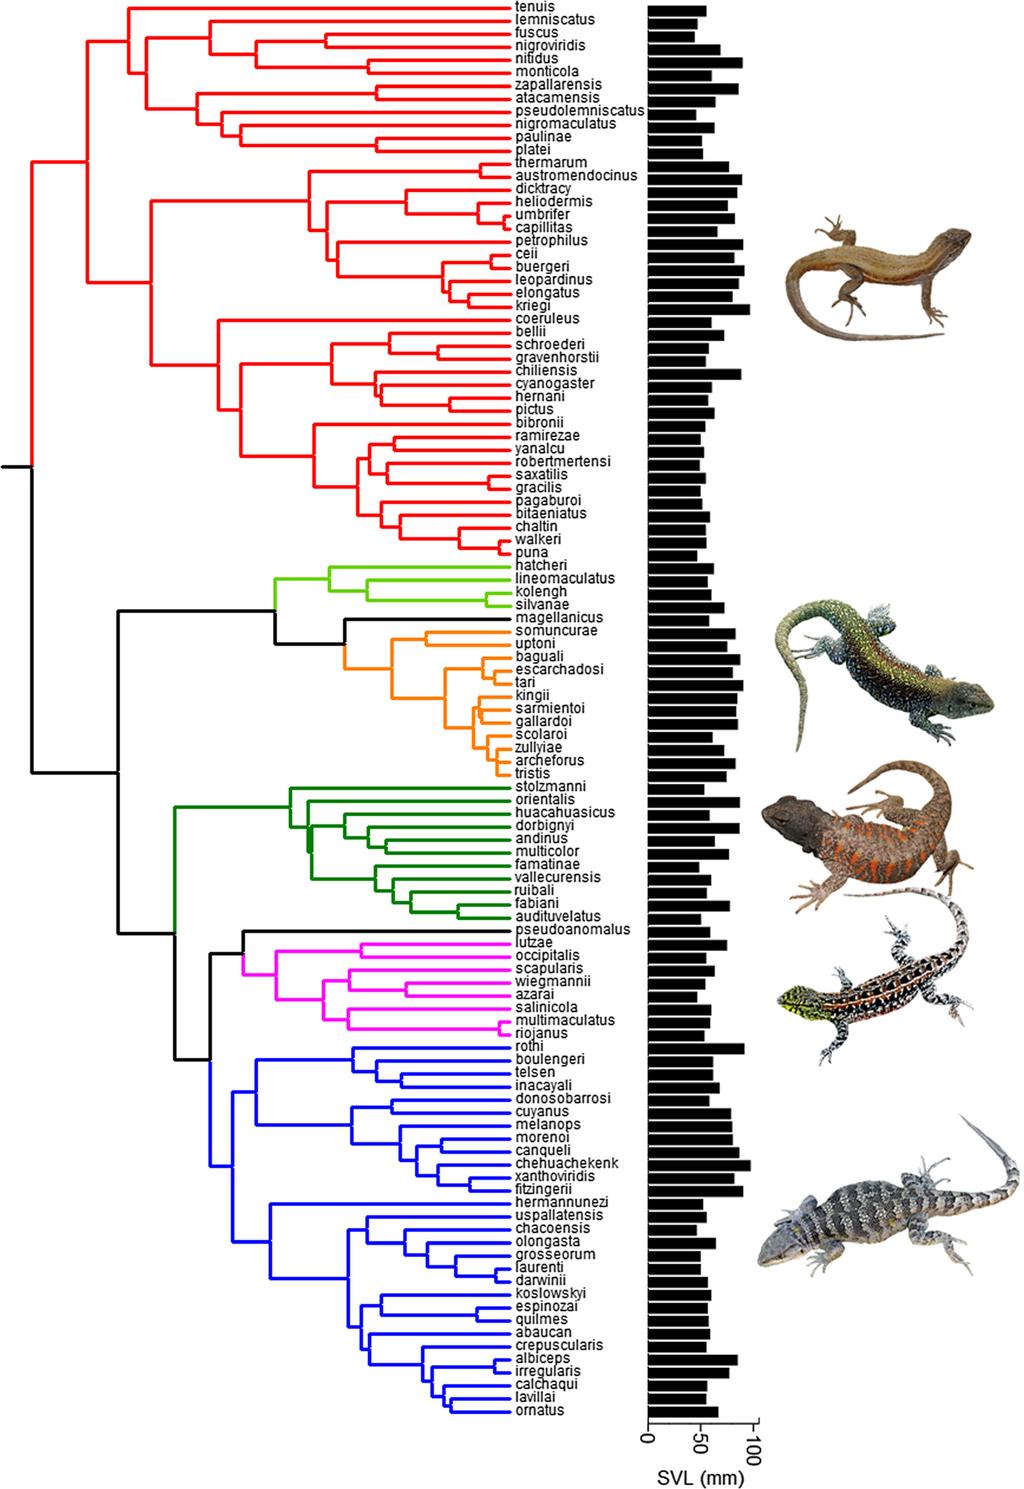 Pincheira-Donoso et al. BMC Evolutionary Biology (2015) 15:153 Page 4 of 13 Fig.